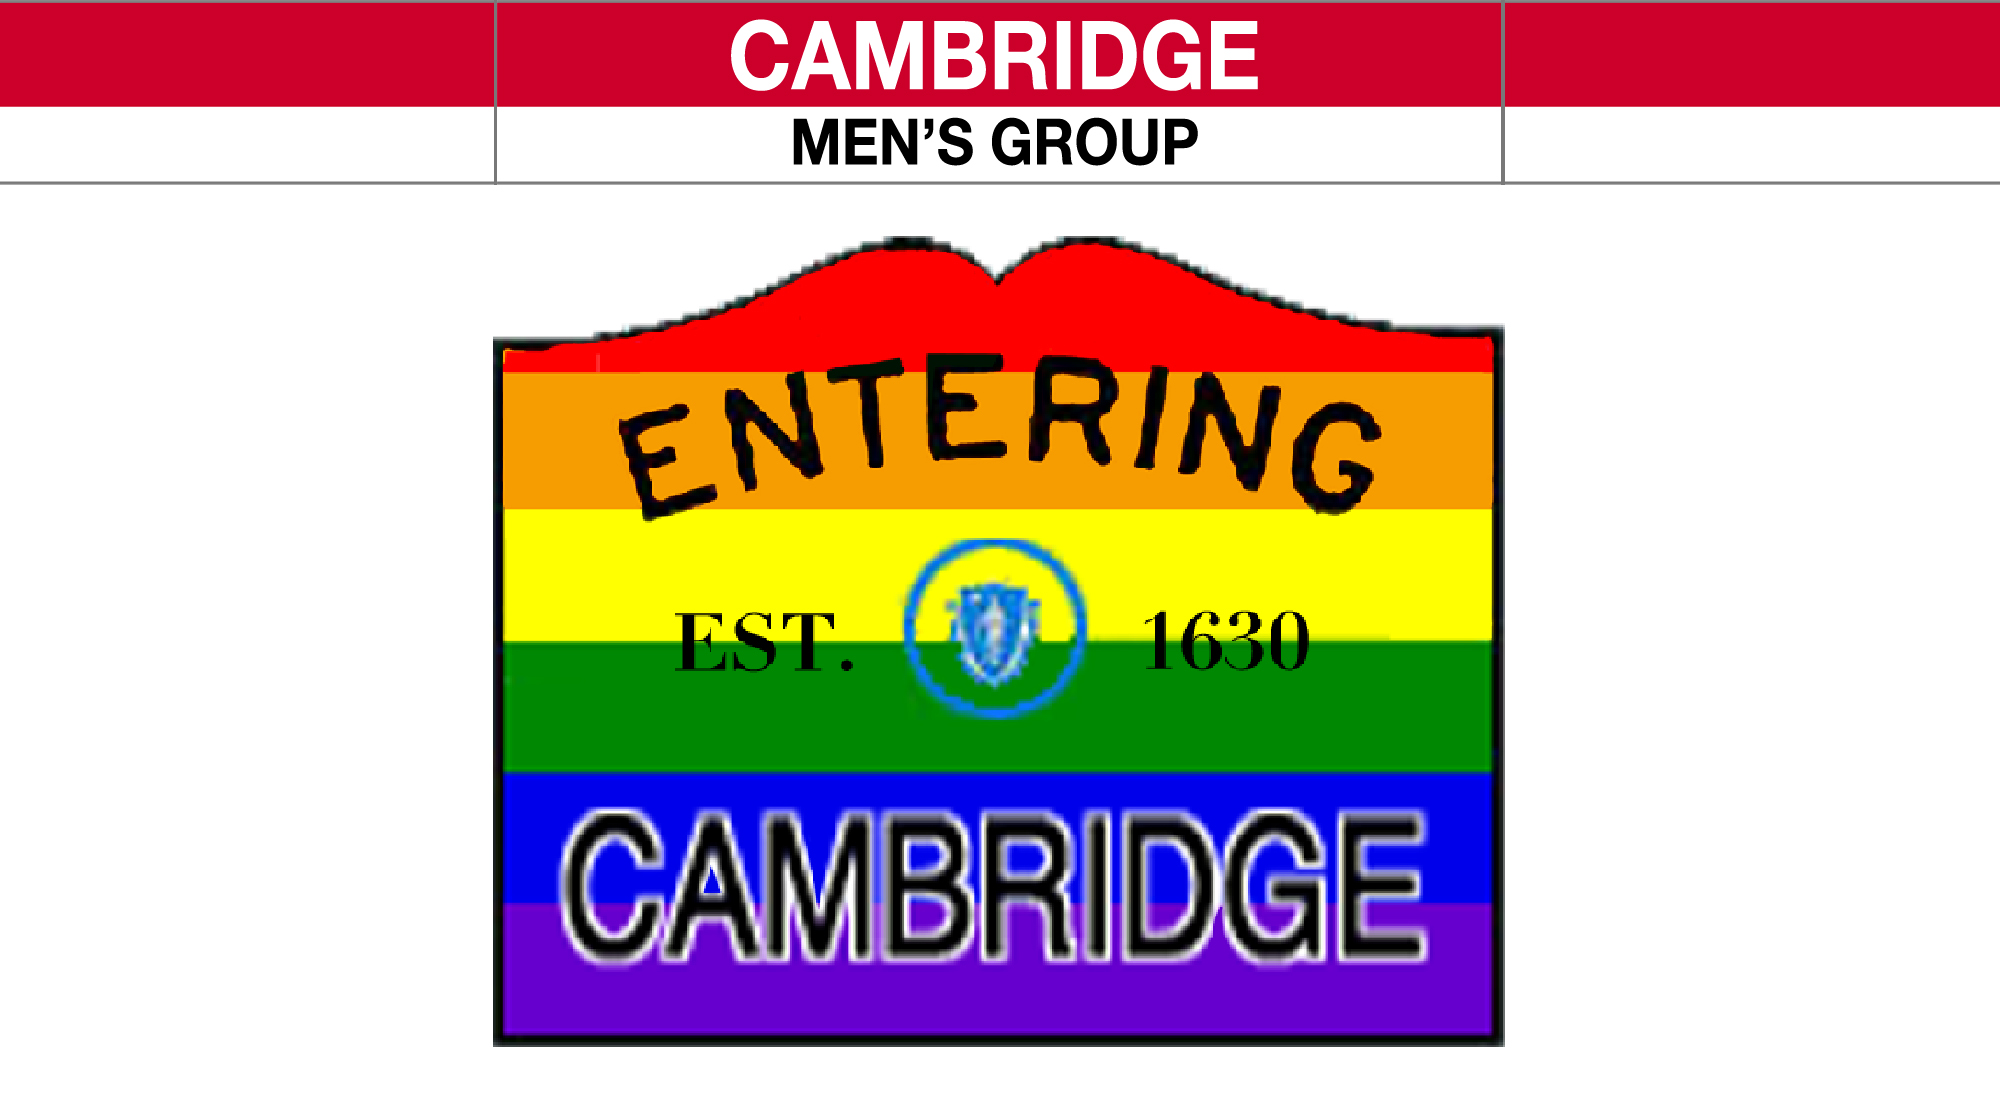 Cambridge Men's Group